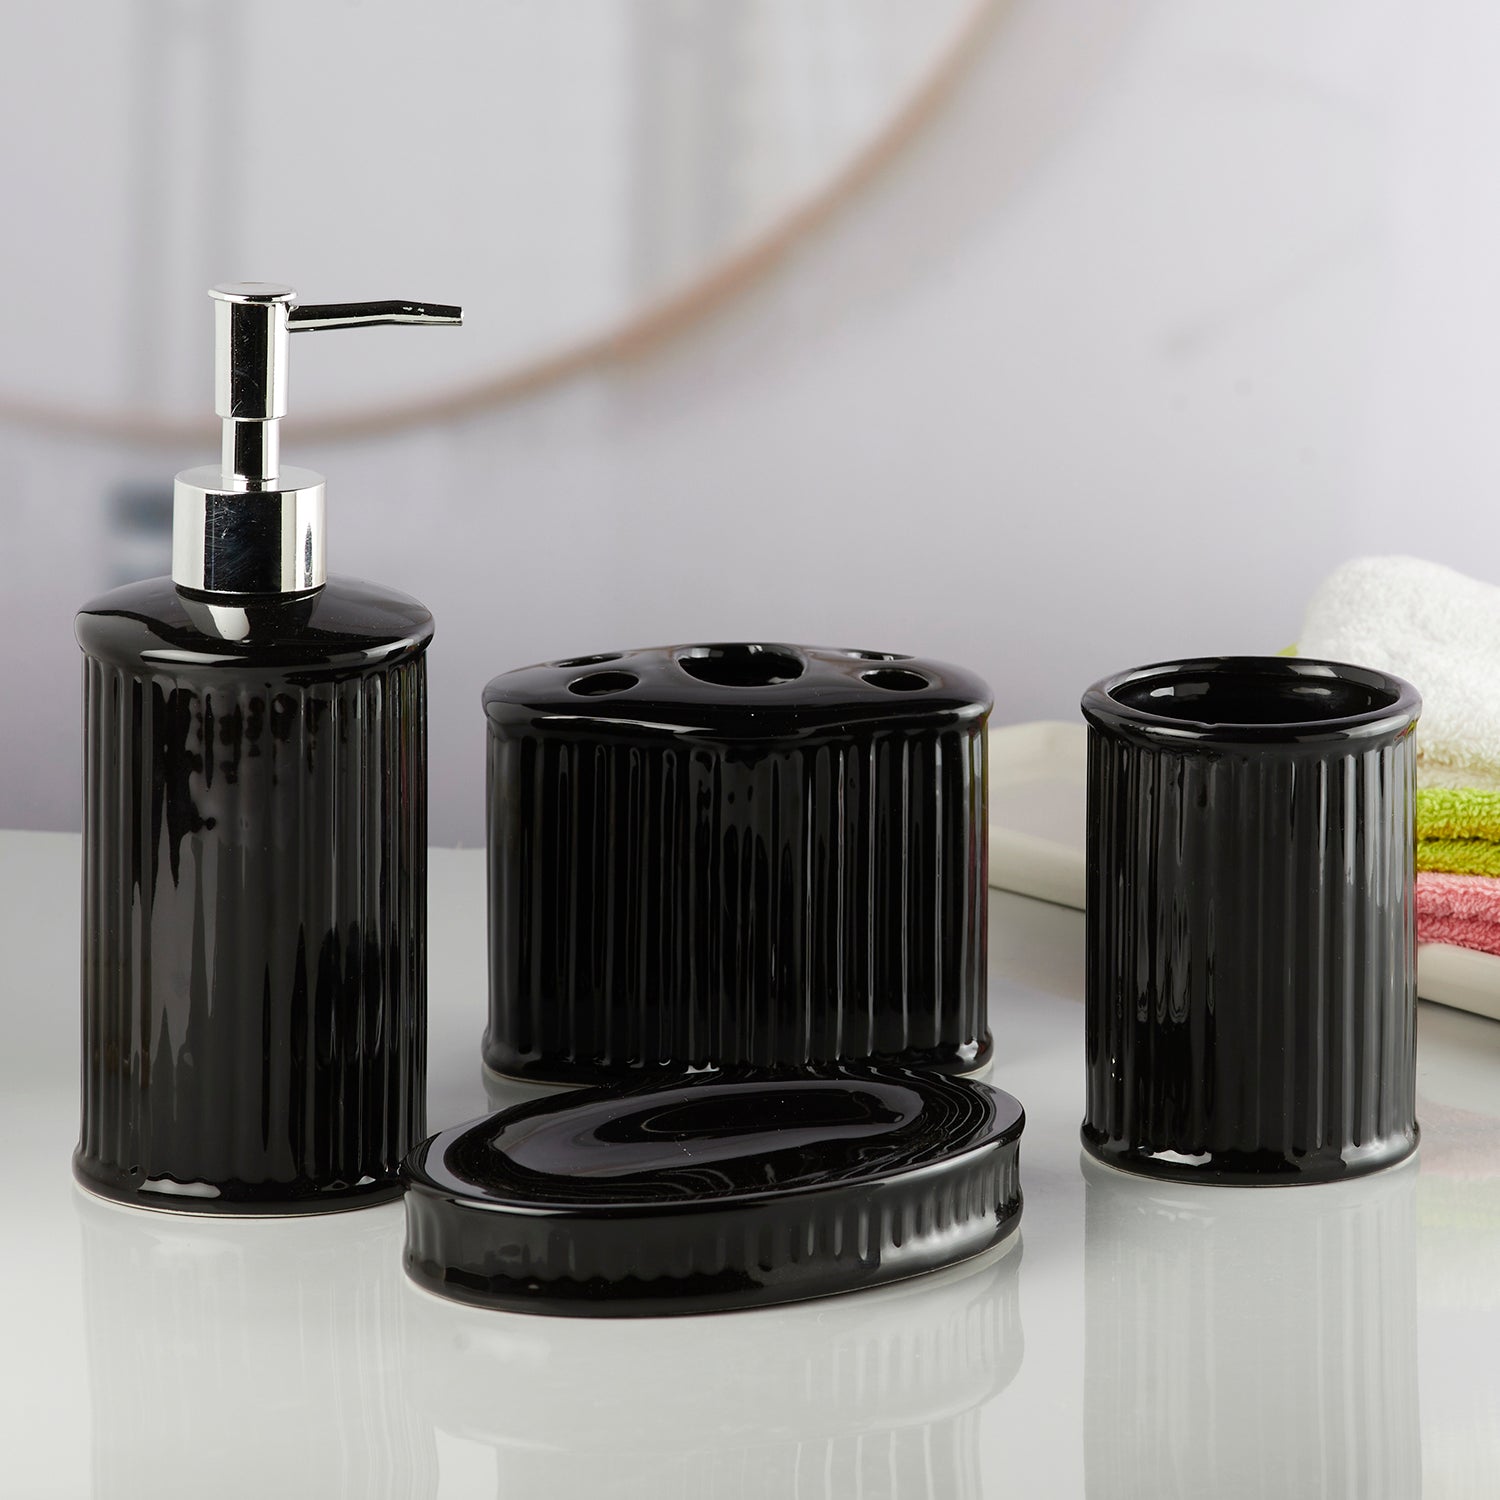 Ceramic Bathroom Accessories Set of 4 Bath Set with Soap Dispenser (8197)